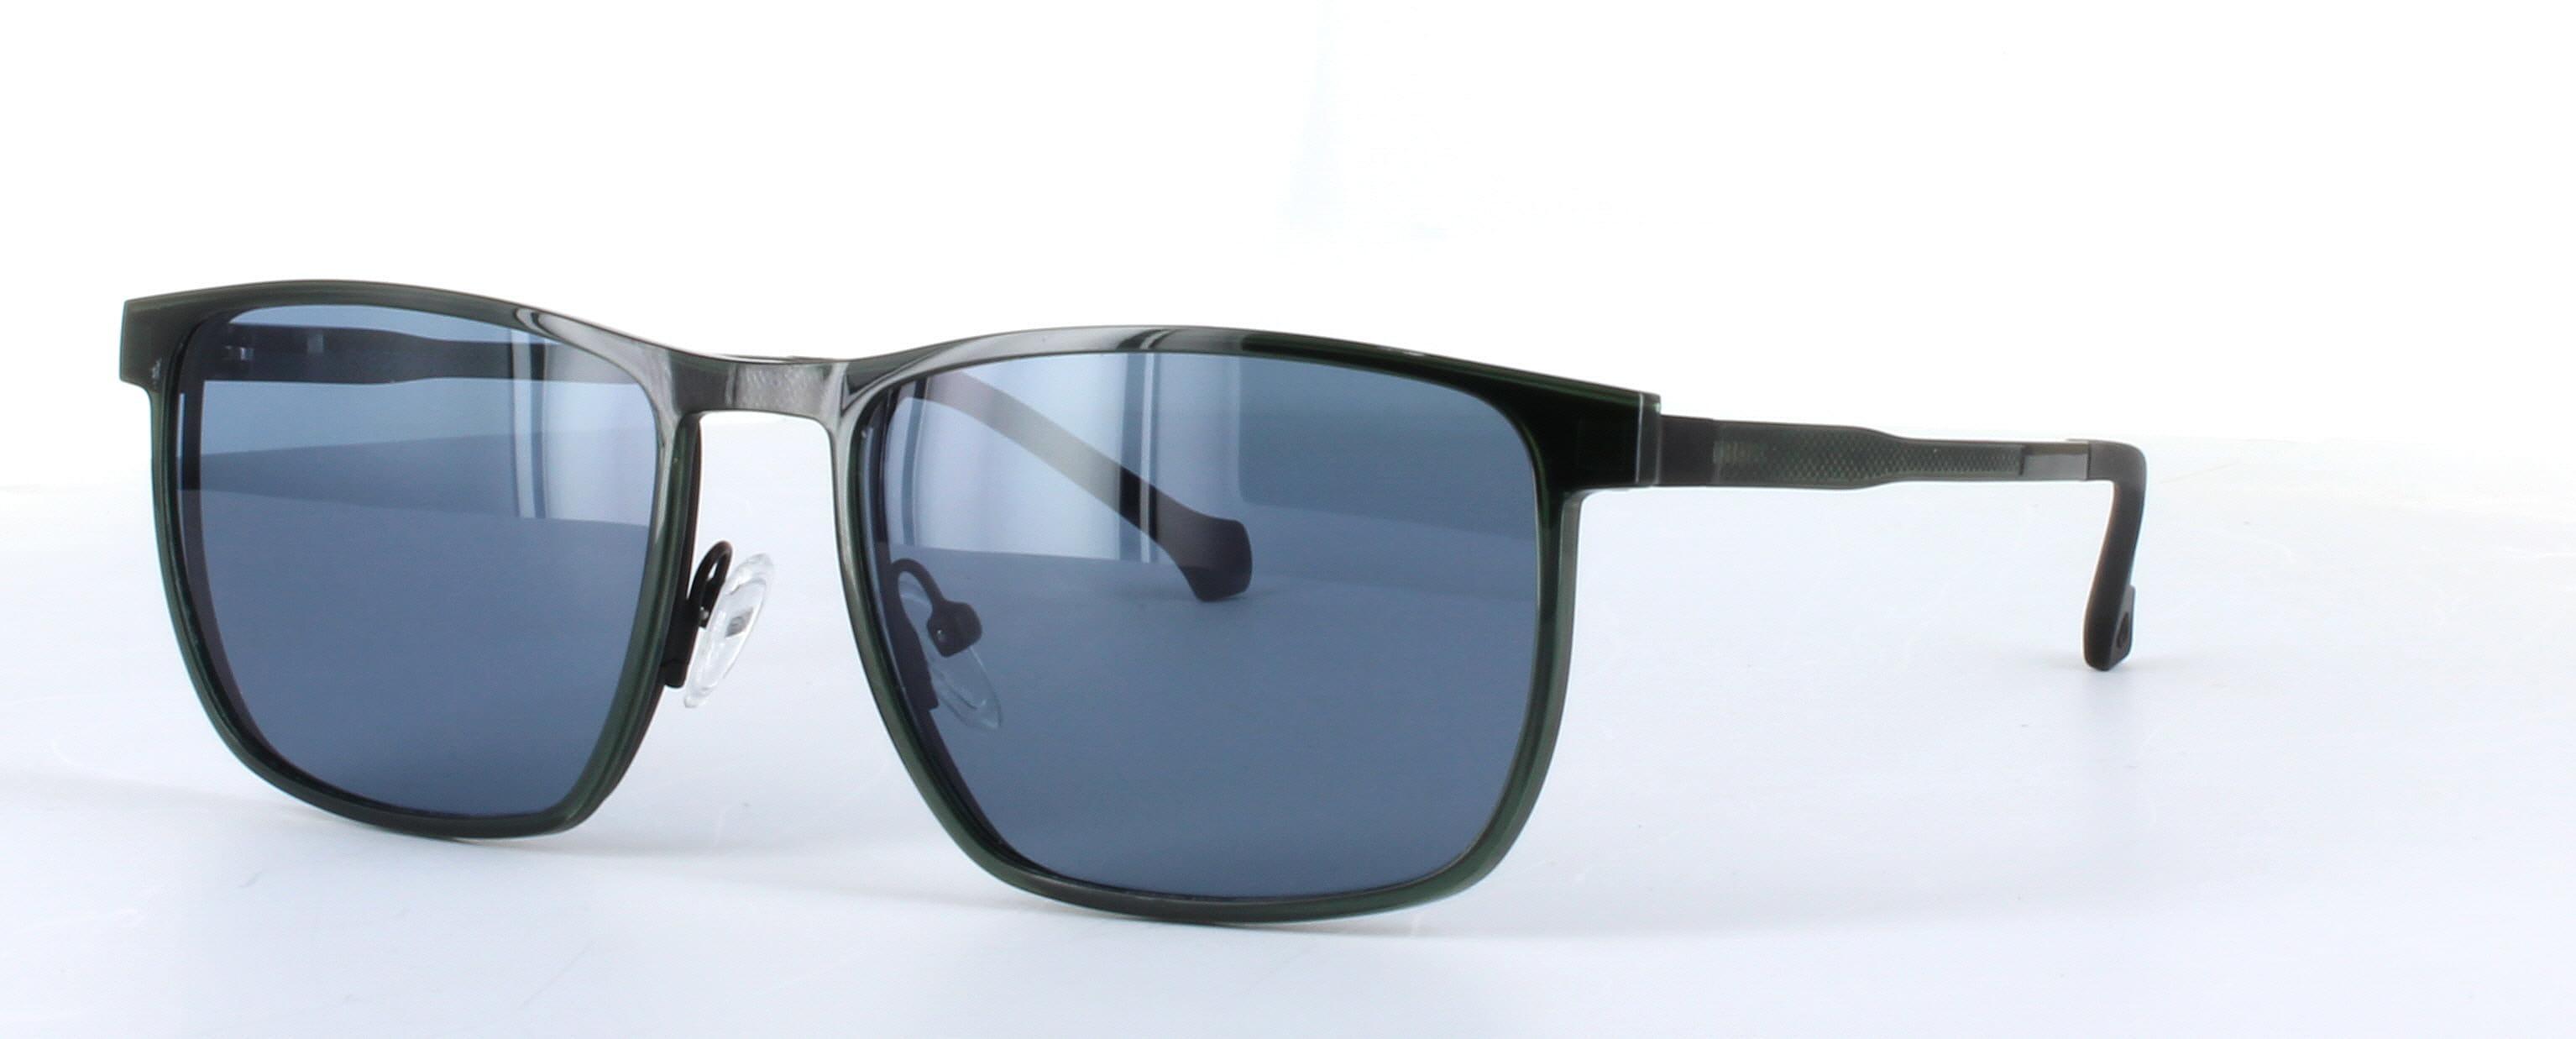 Eyecroxx 601-C2 Black Full Rim Metal Glasses - Image View 4